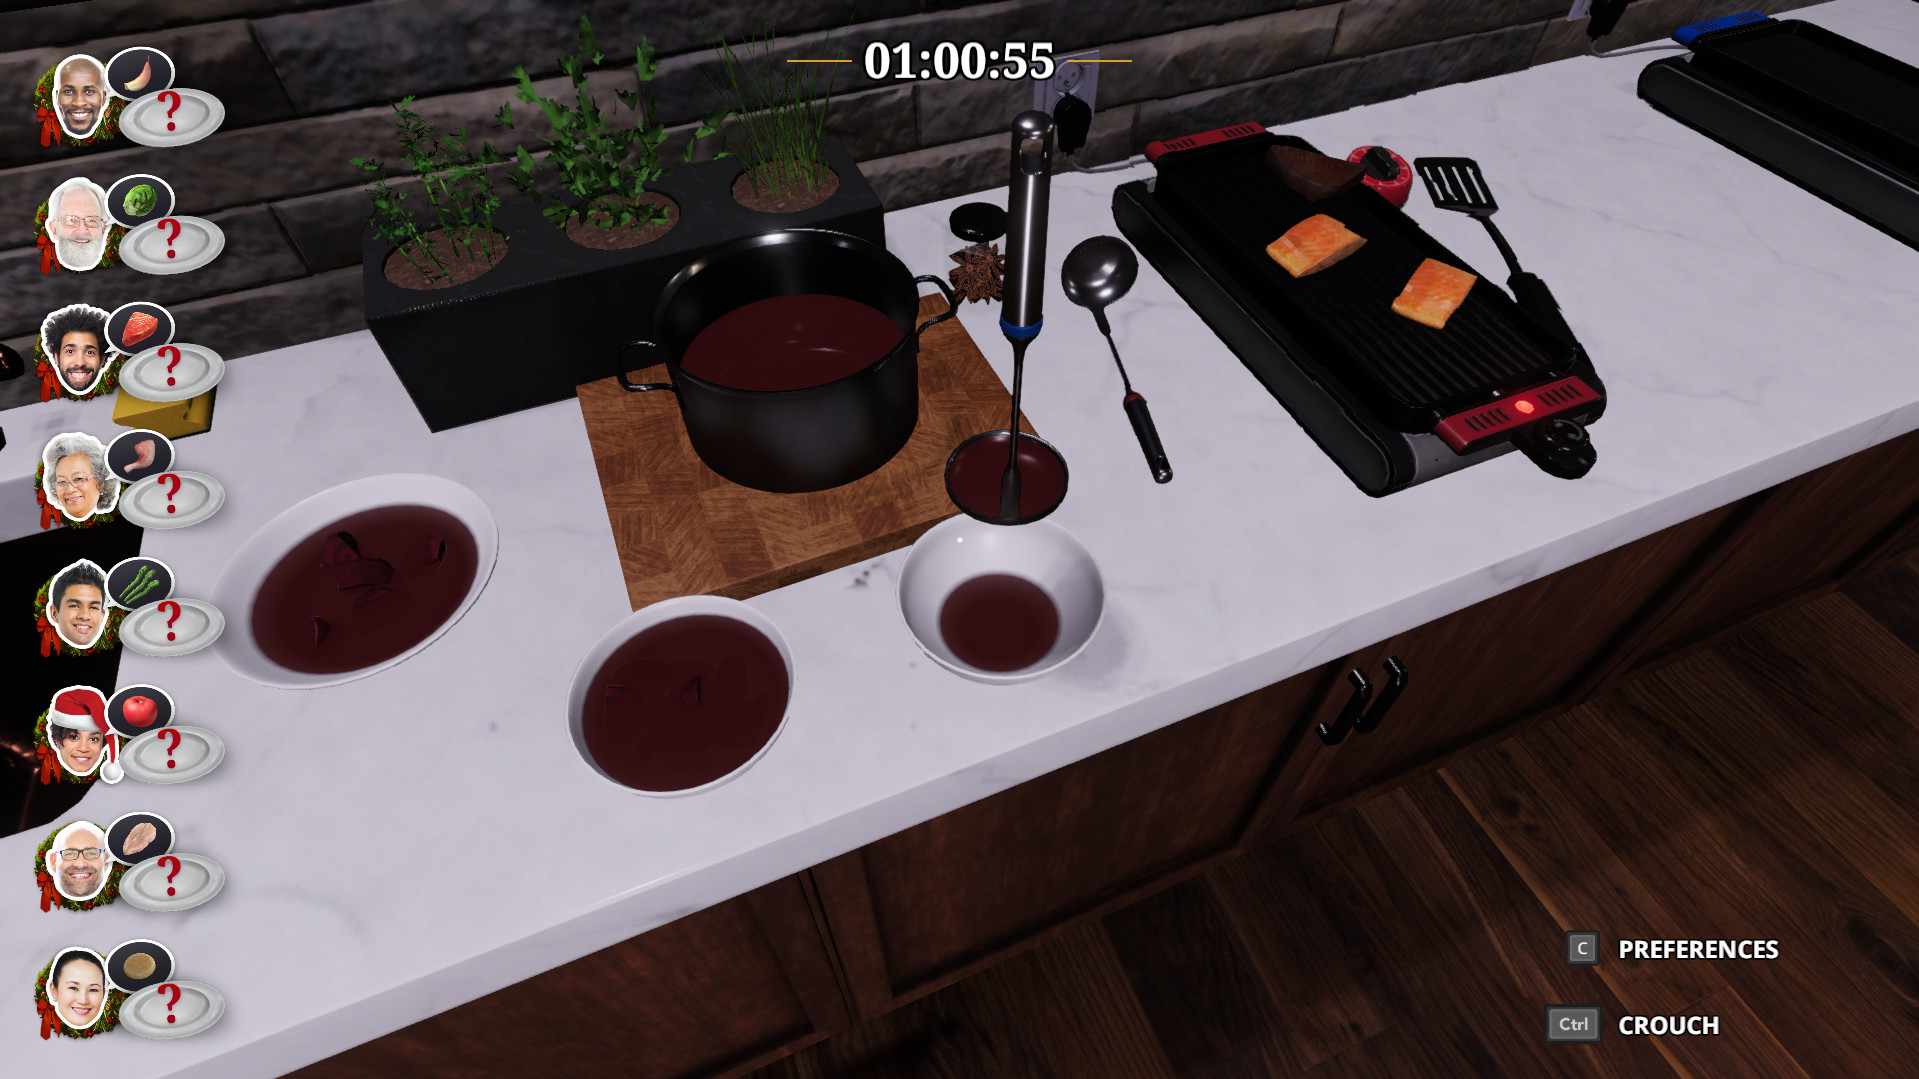 cooking simulator torrent download